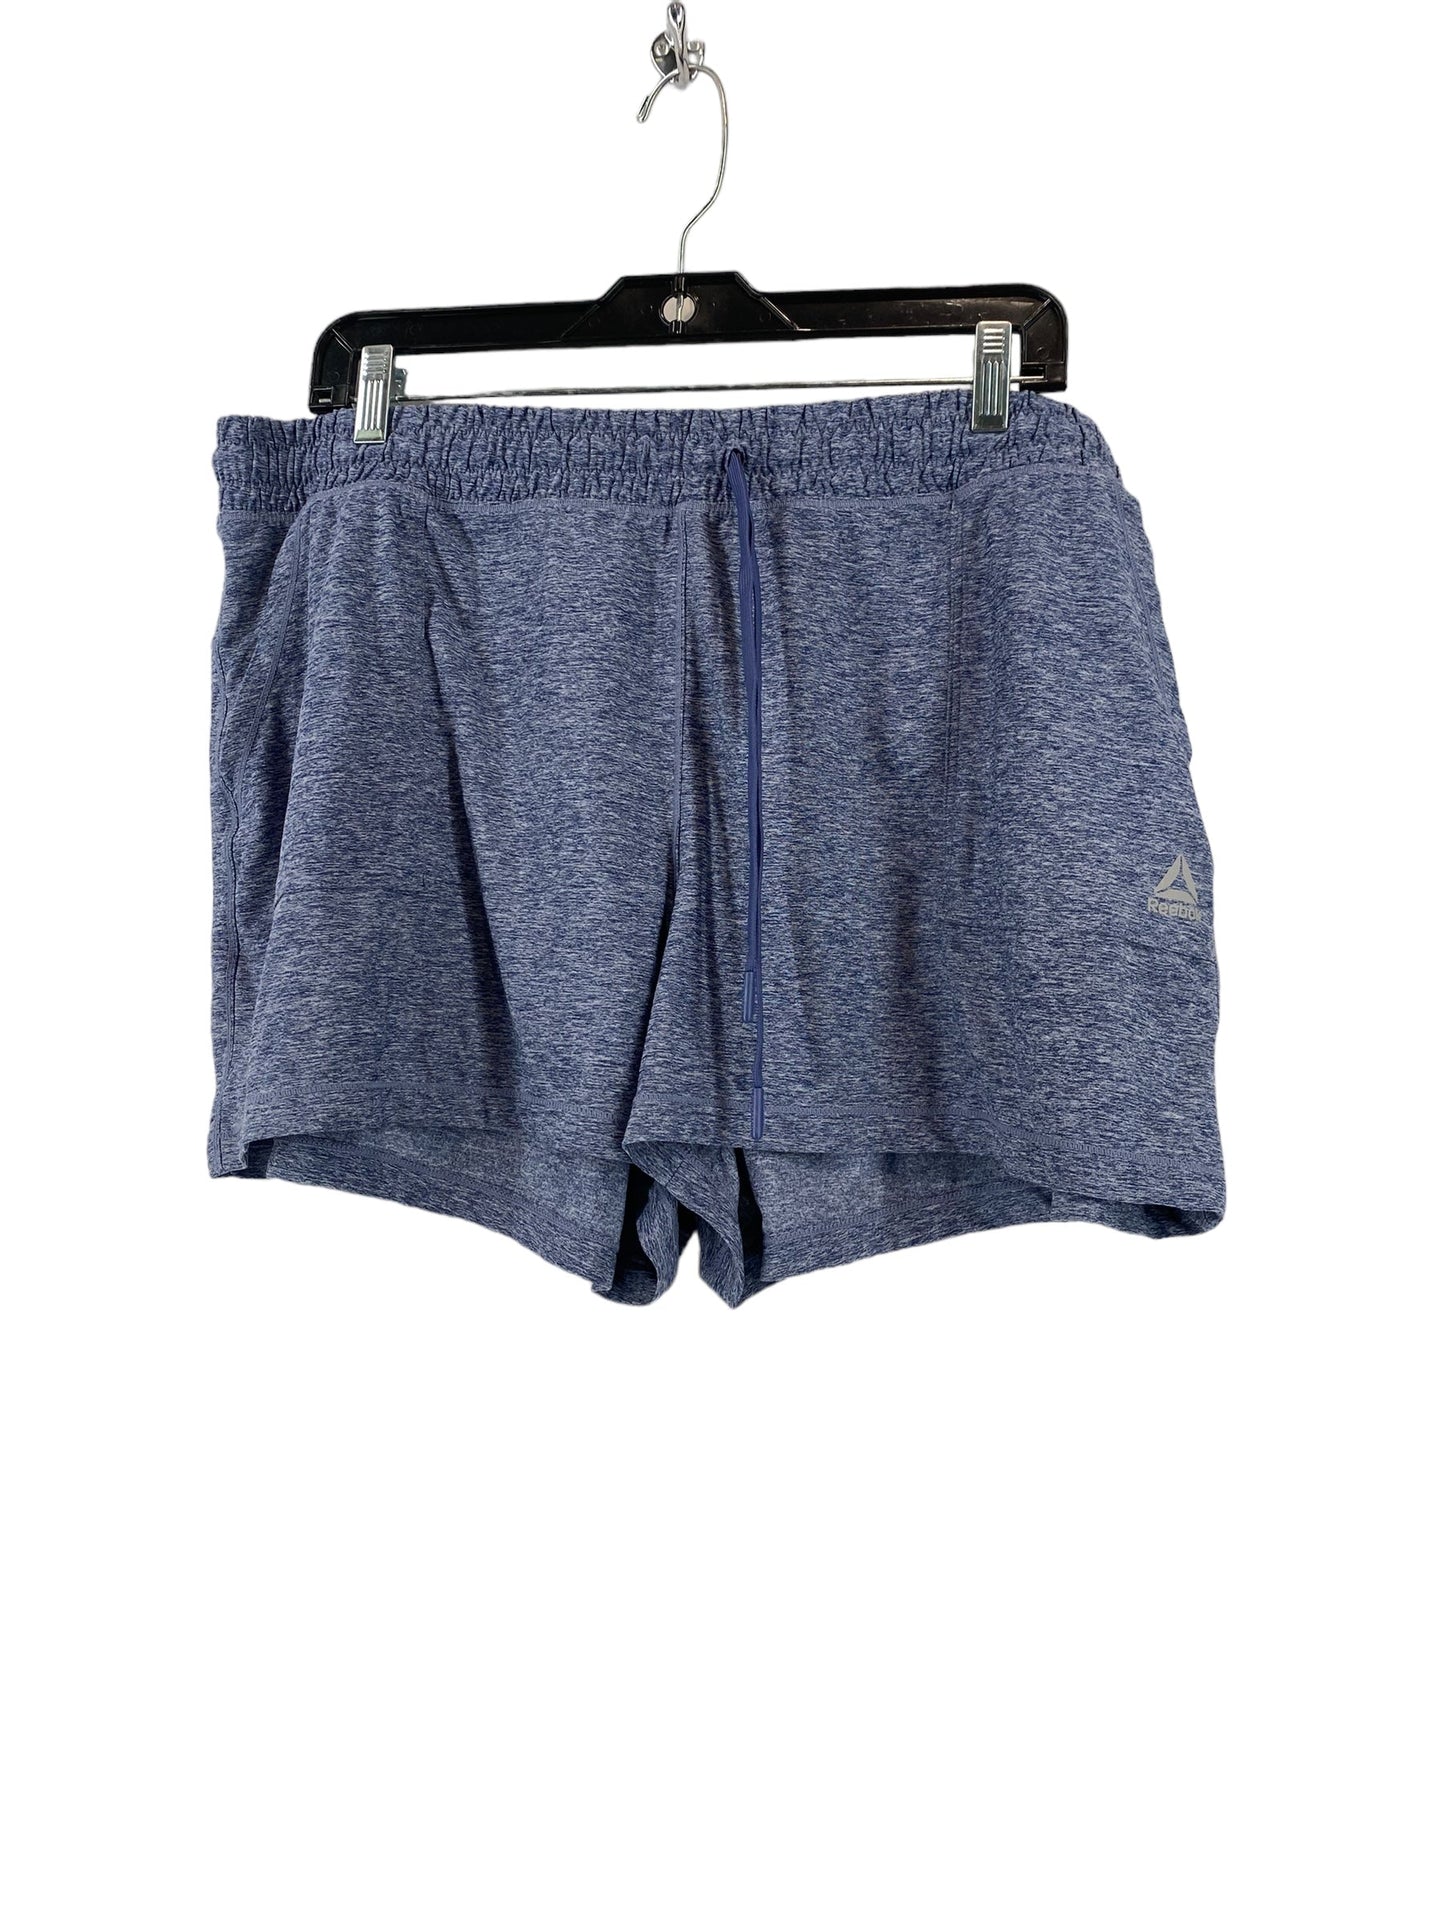 Blue Athletic Shorts Reebok, Size 2x